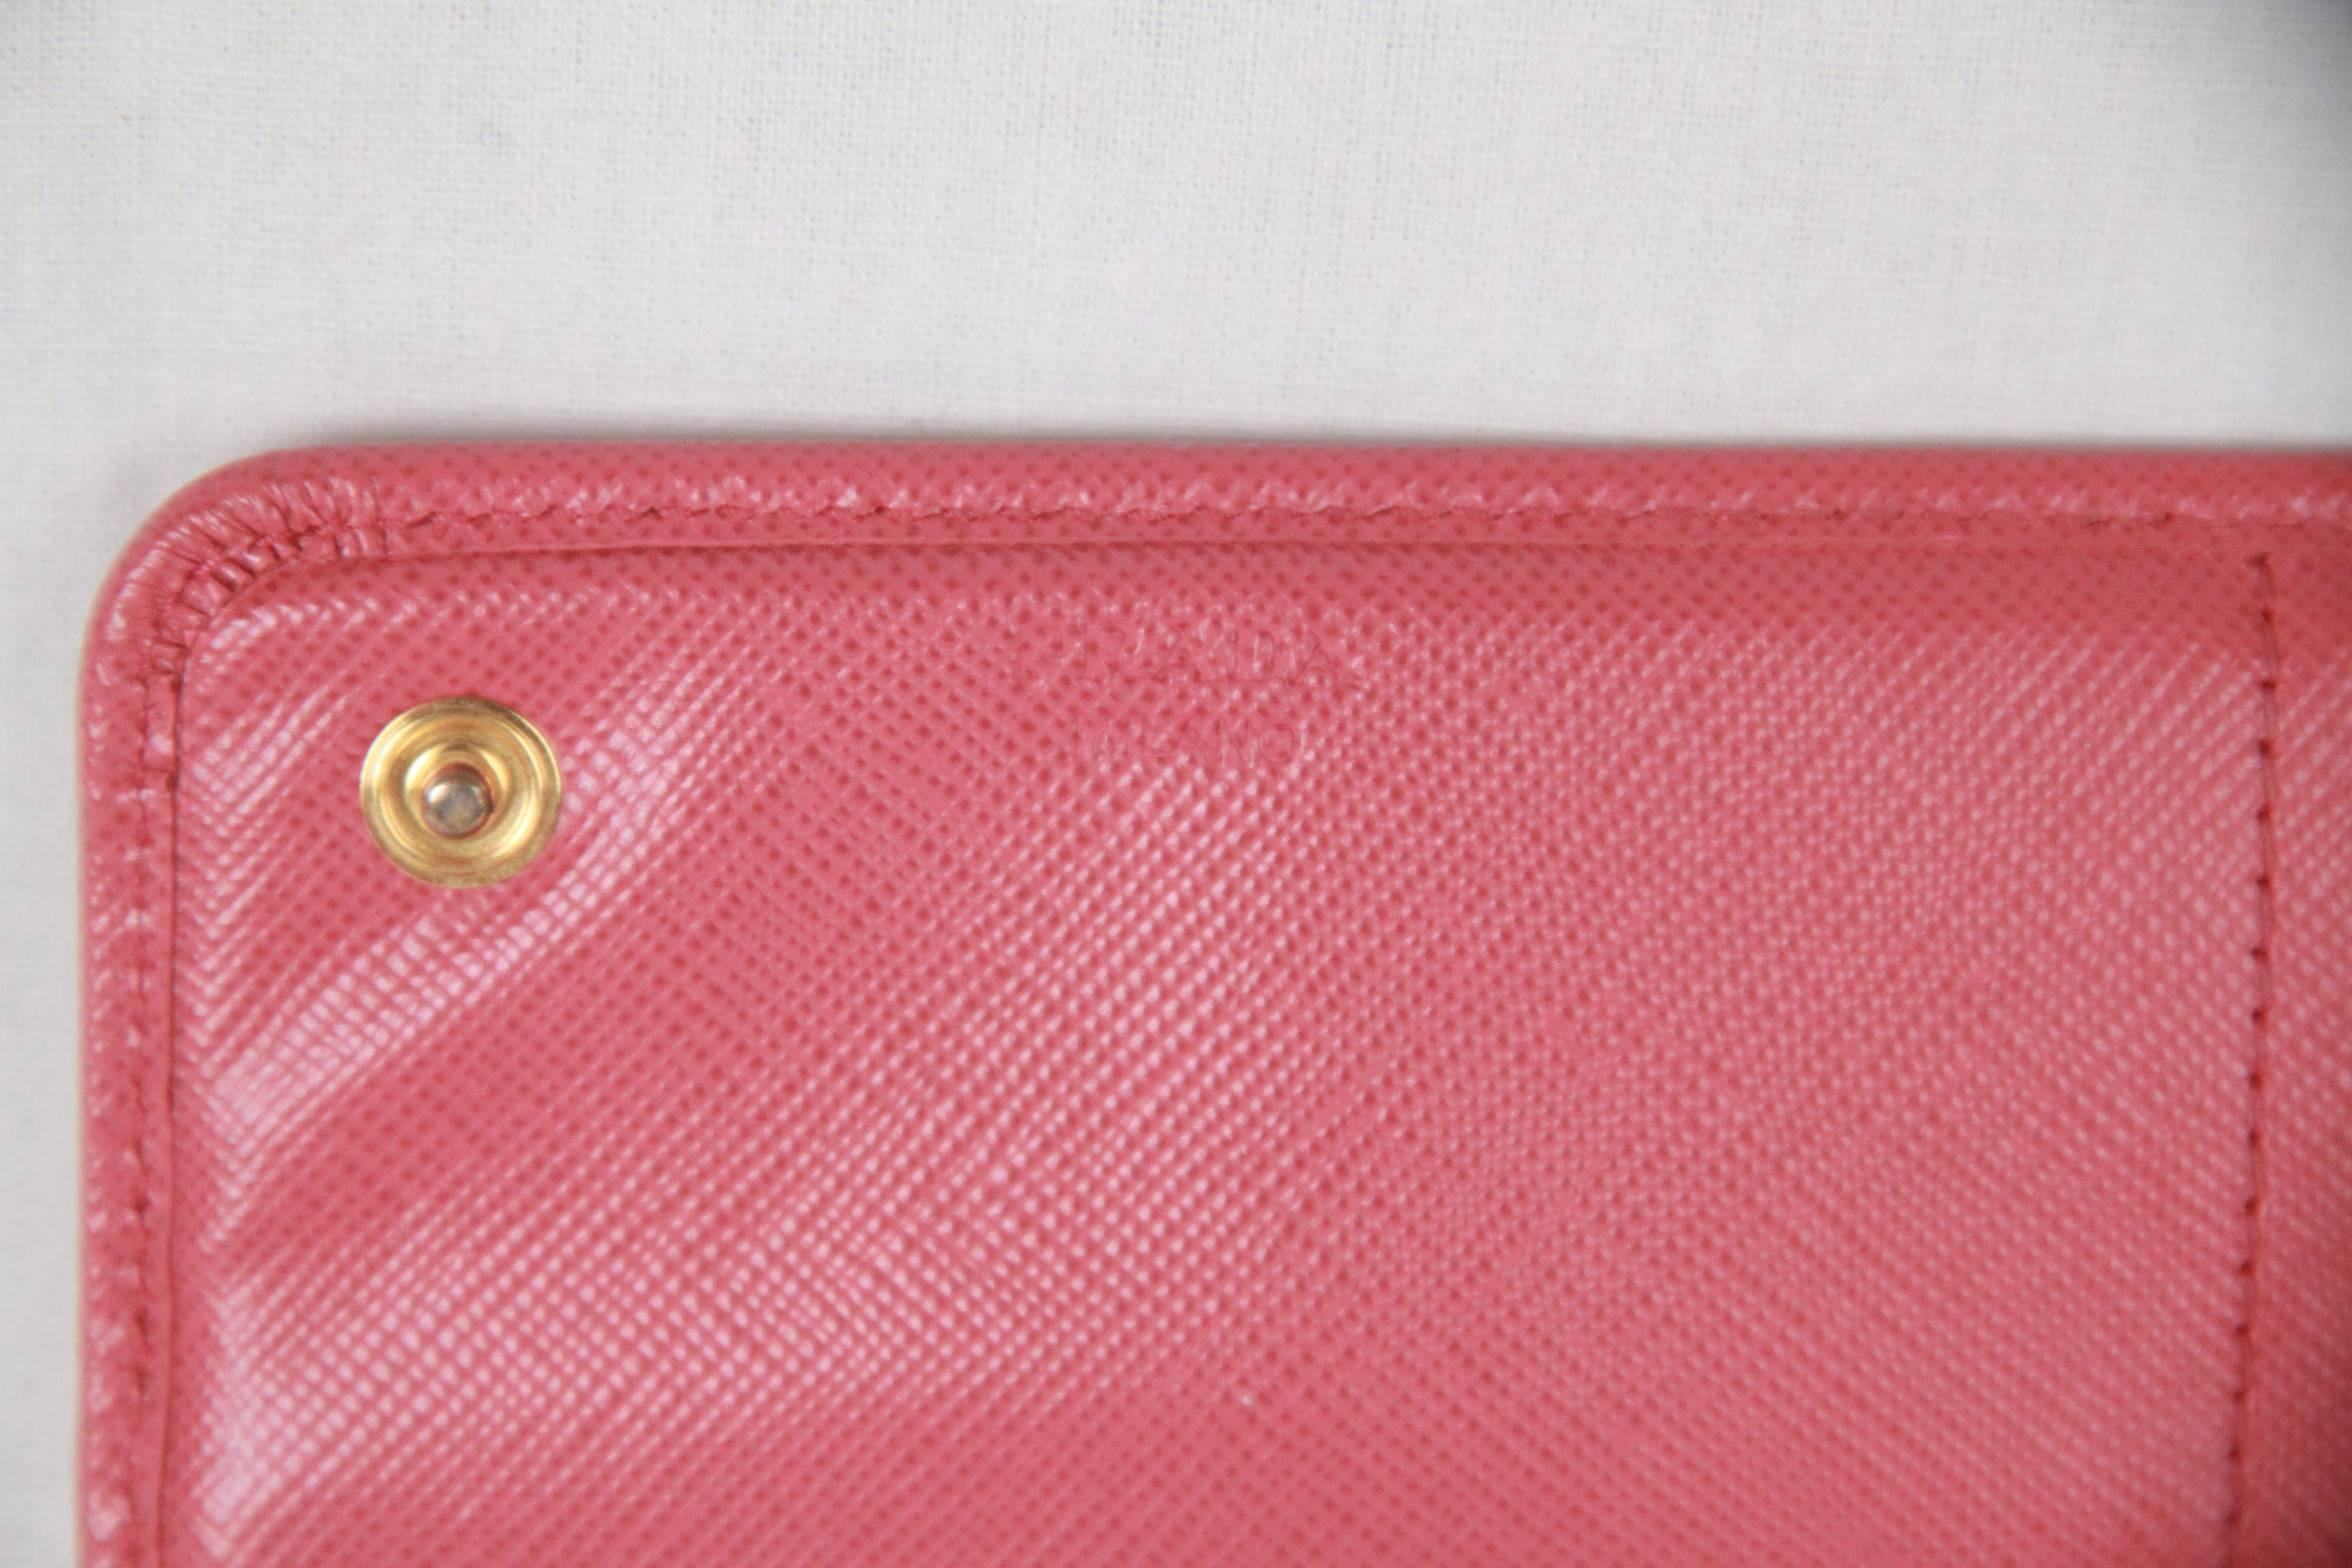 PRADA Pink SAFFIANO Leather FLAP CONTINENTAL WALLET 1M1132 1